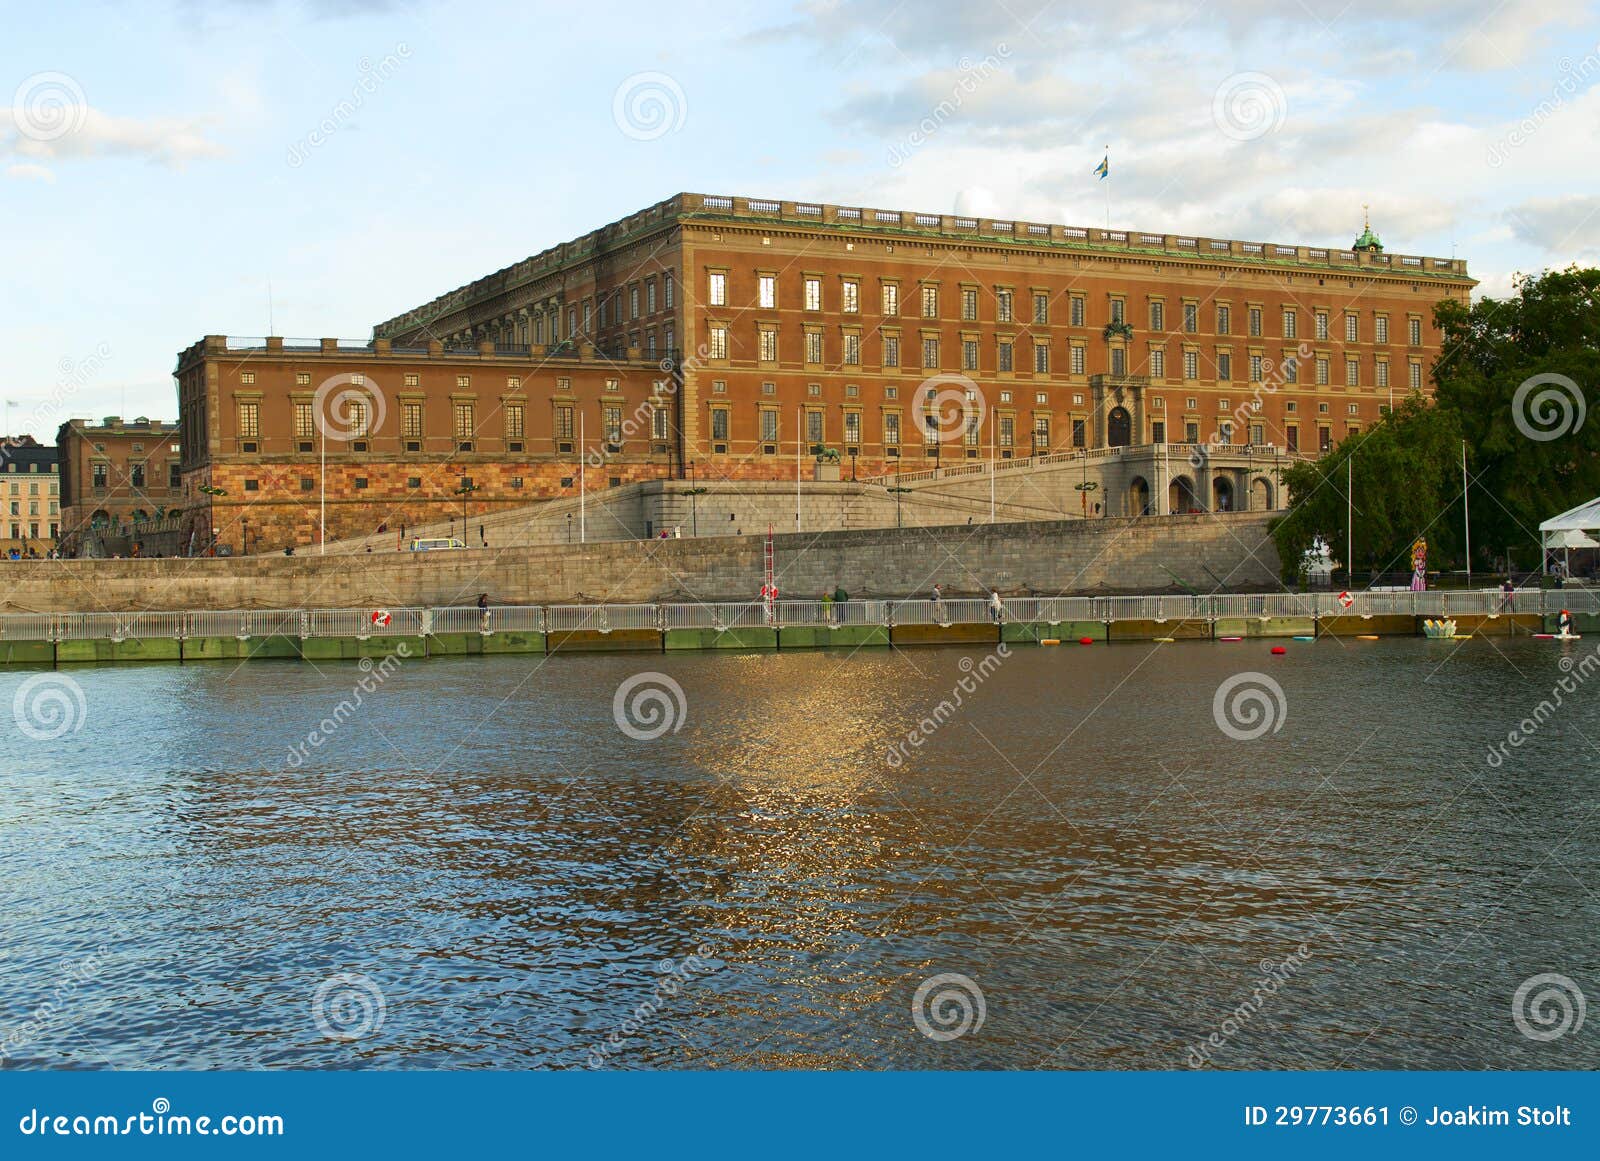 swedish royal palace in stockholm